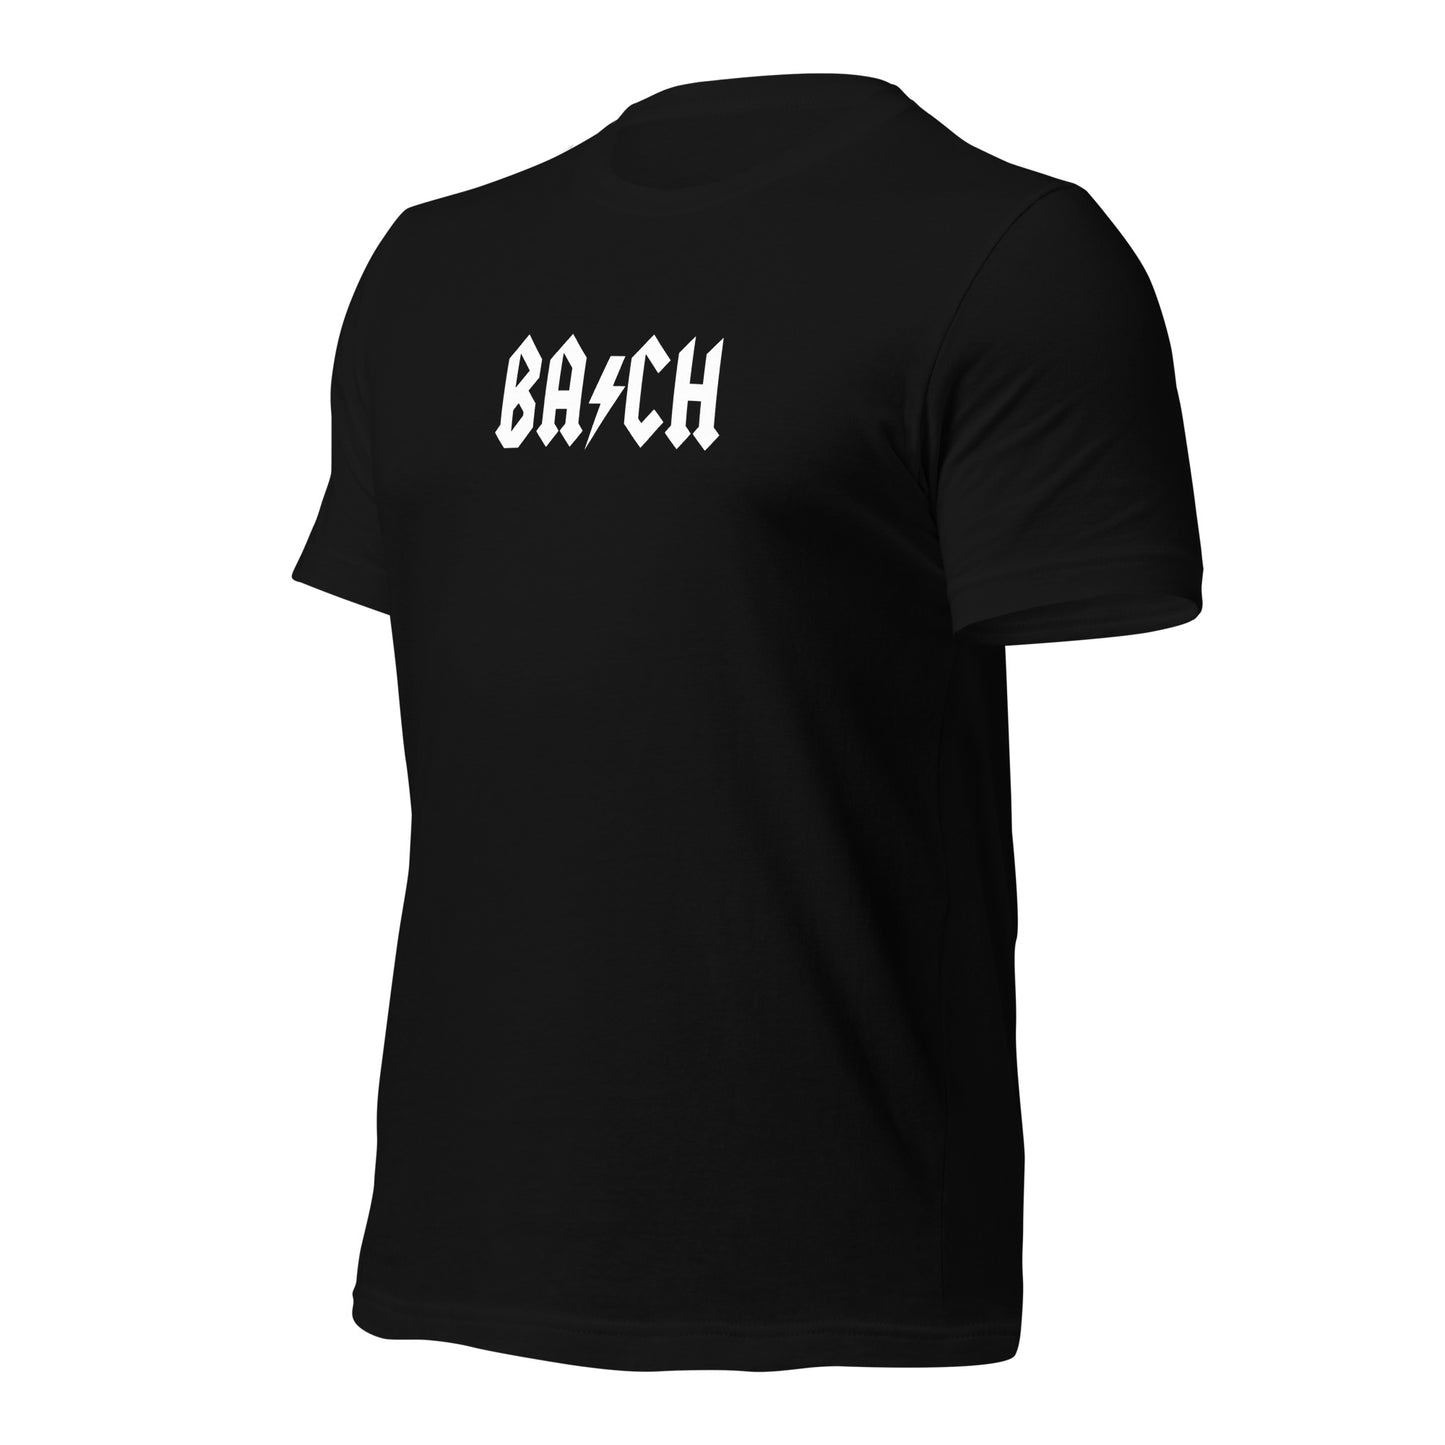 J. S. Bach - Band Tees Unisex t-shirt